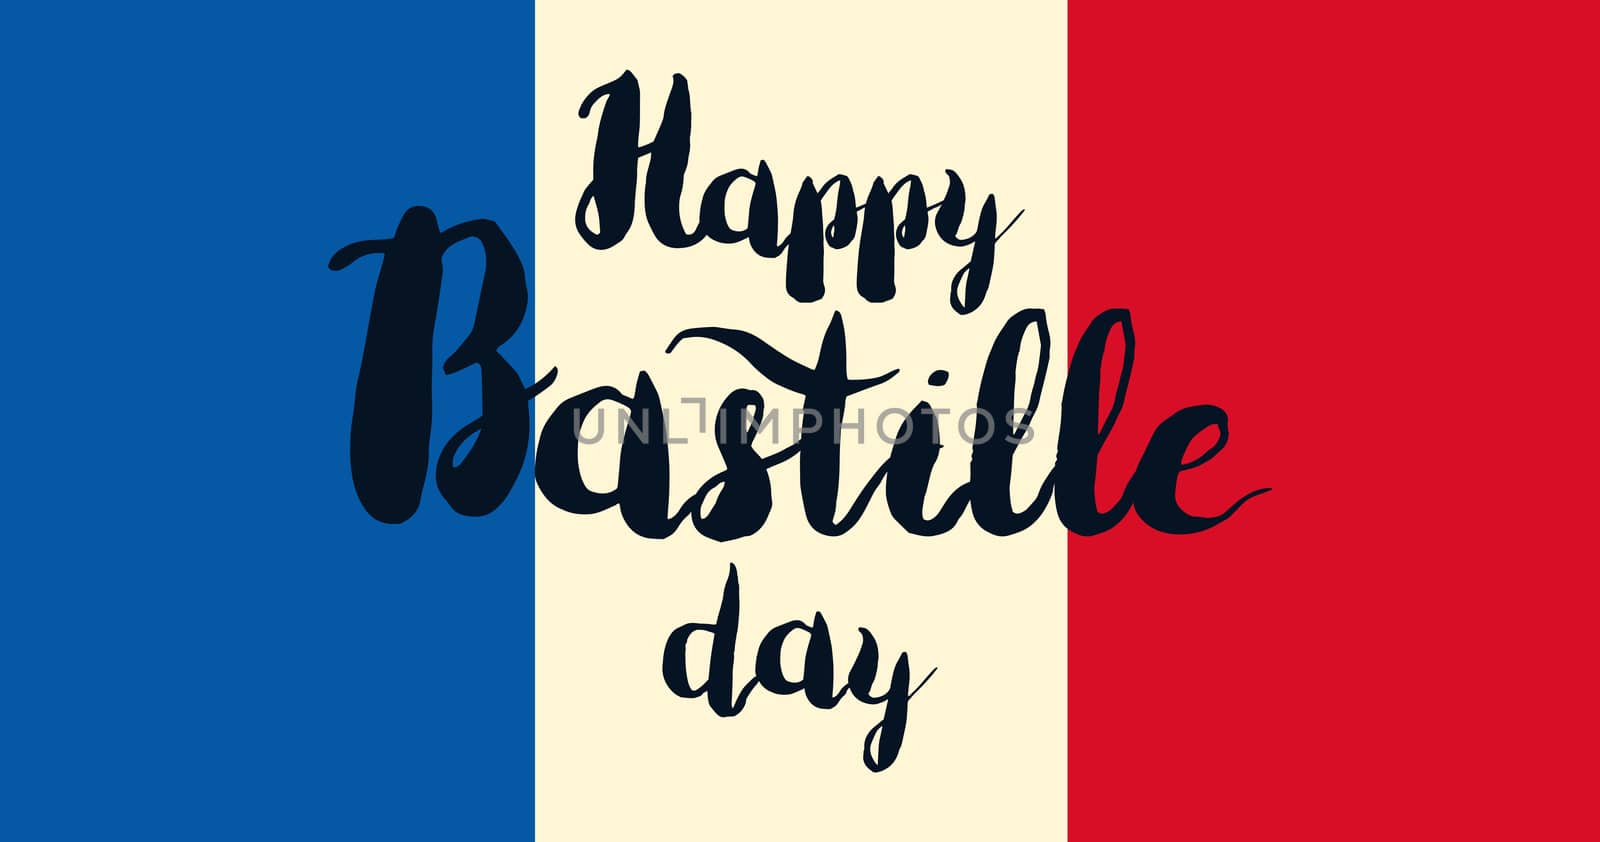 Happy Bastille Day by barsrsind